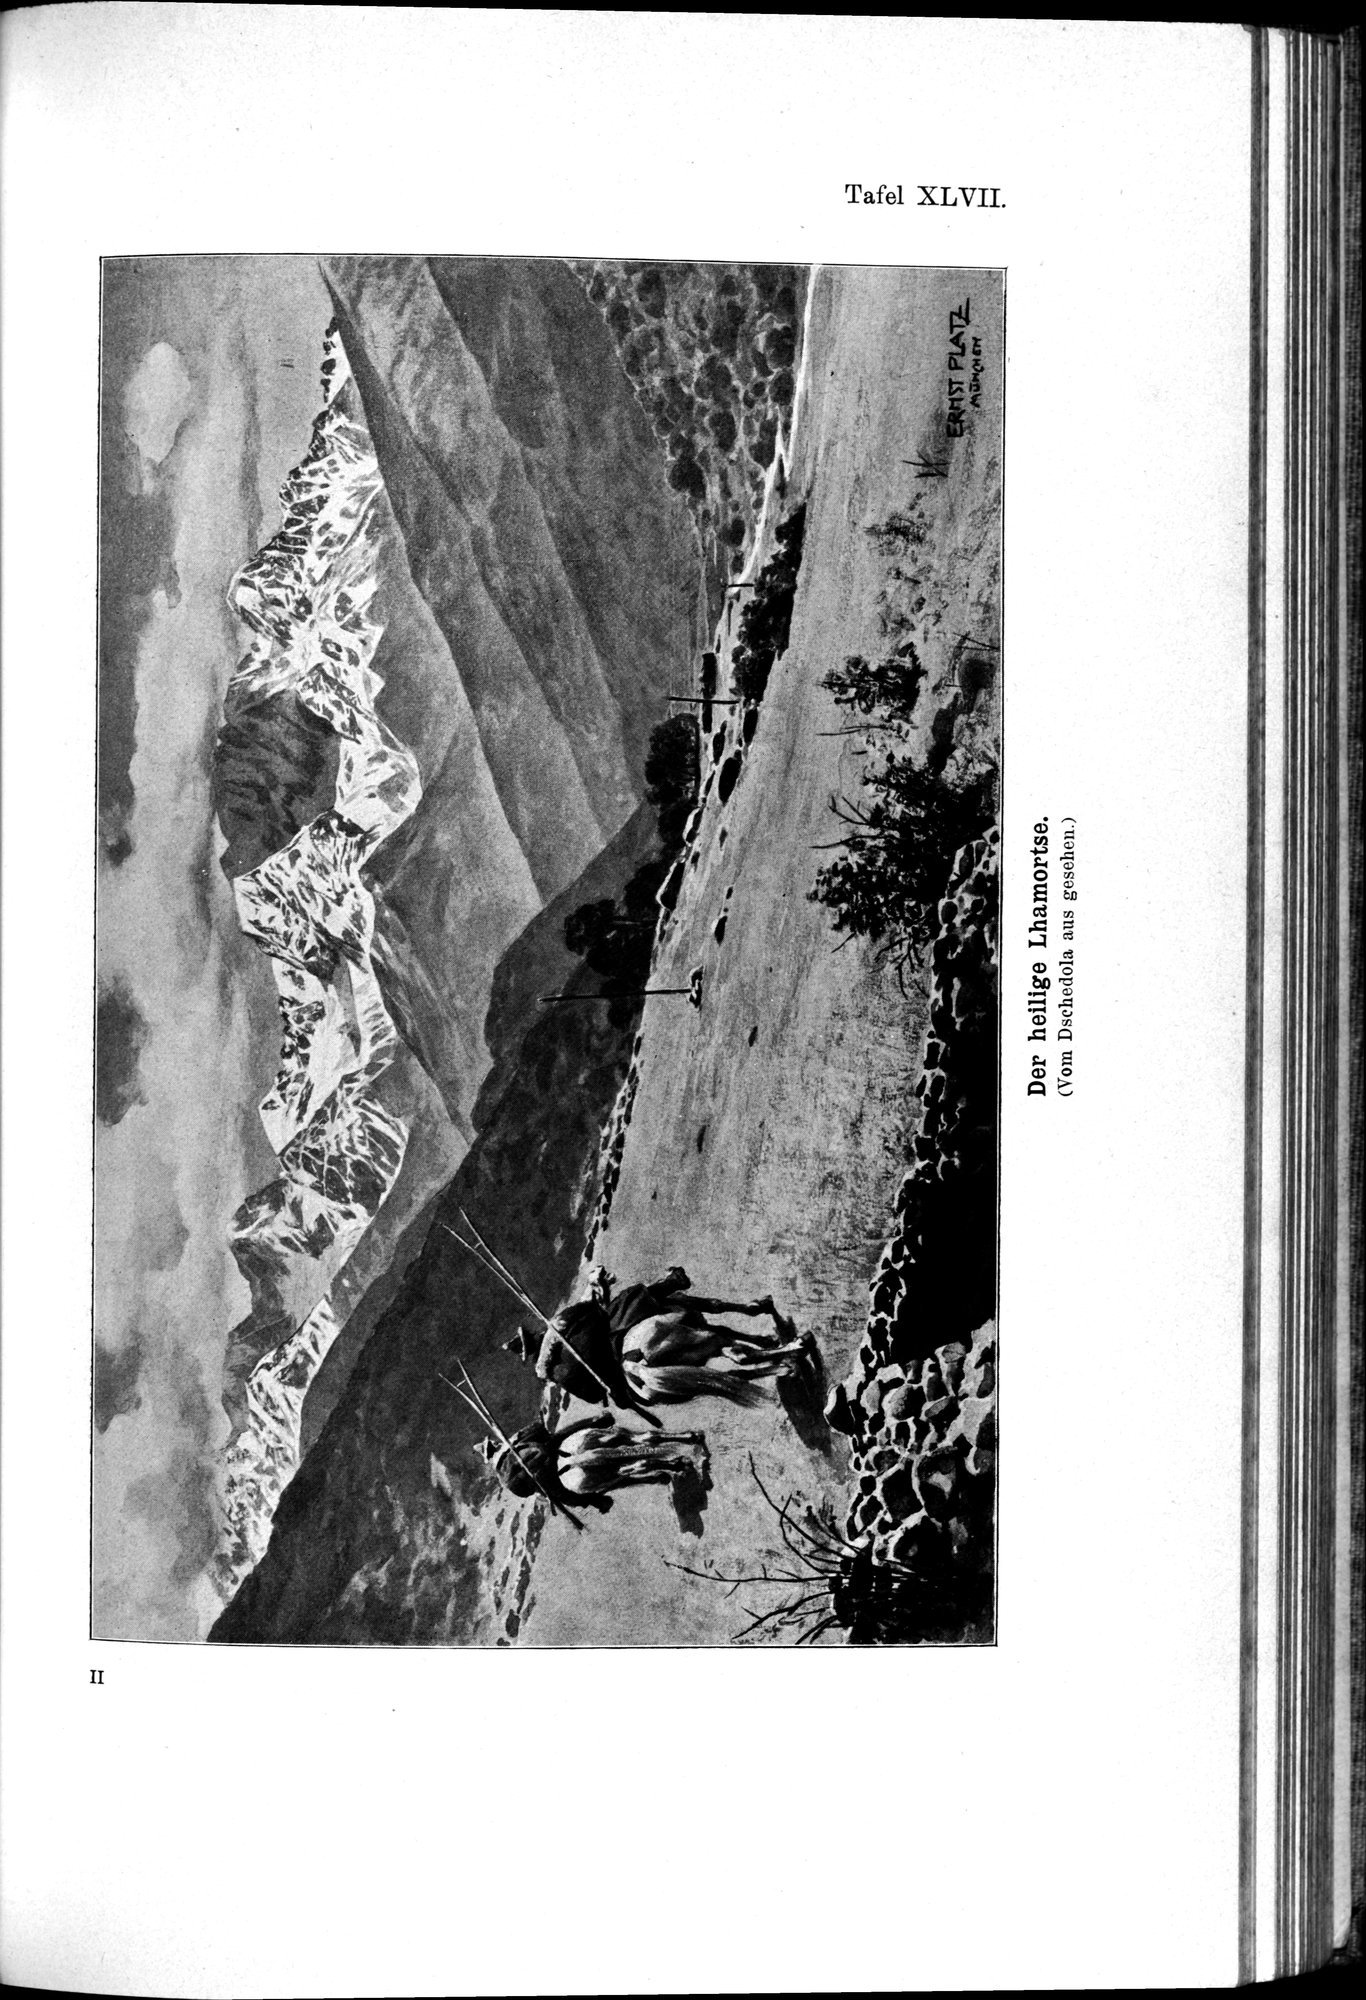 Meine Tibetreise : vol.2 / Page 249 (Grayscale High Resolution Image)